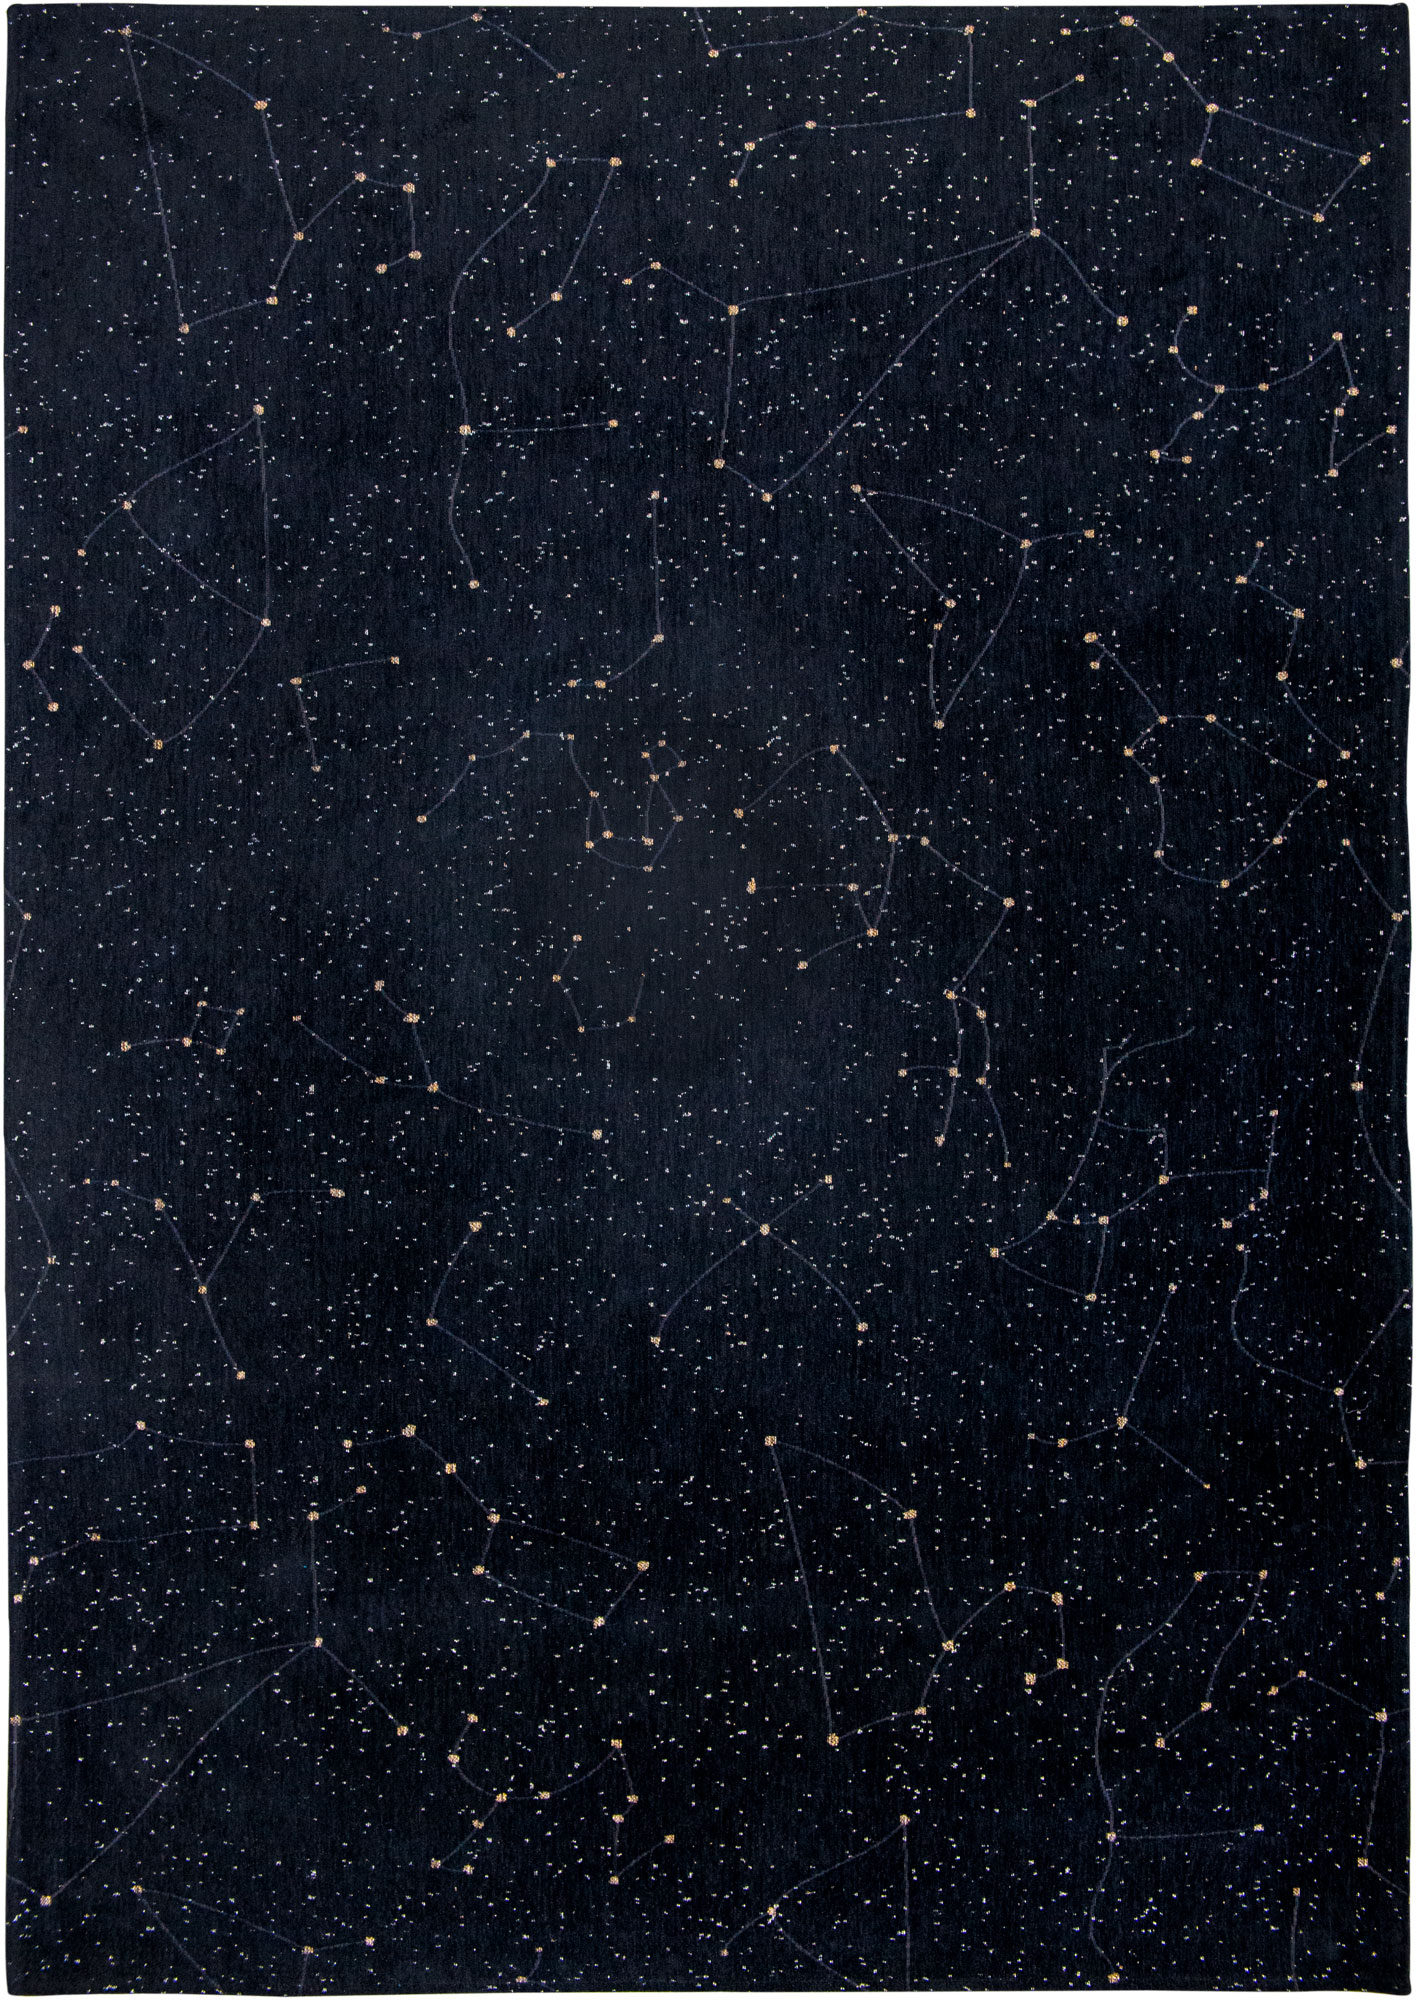 Covor Christian Fischbacher Celestial colectia Neon 170x240cm Night Sky